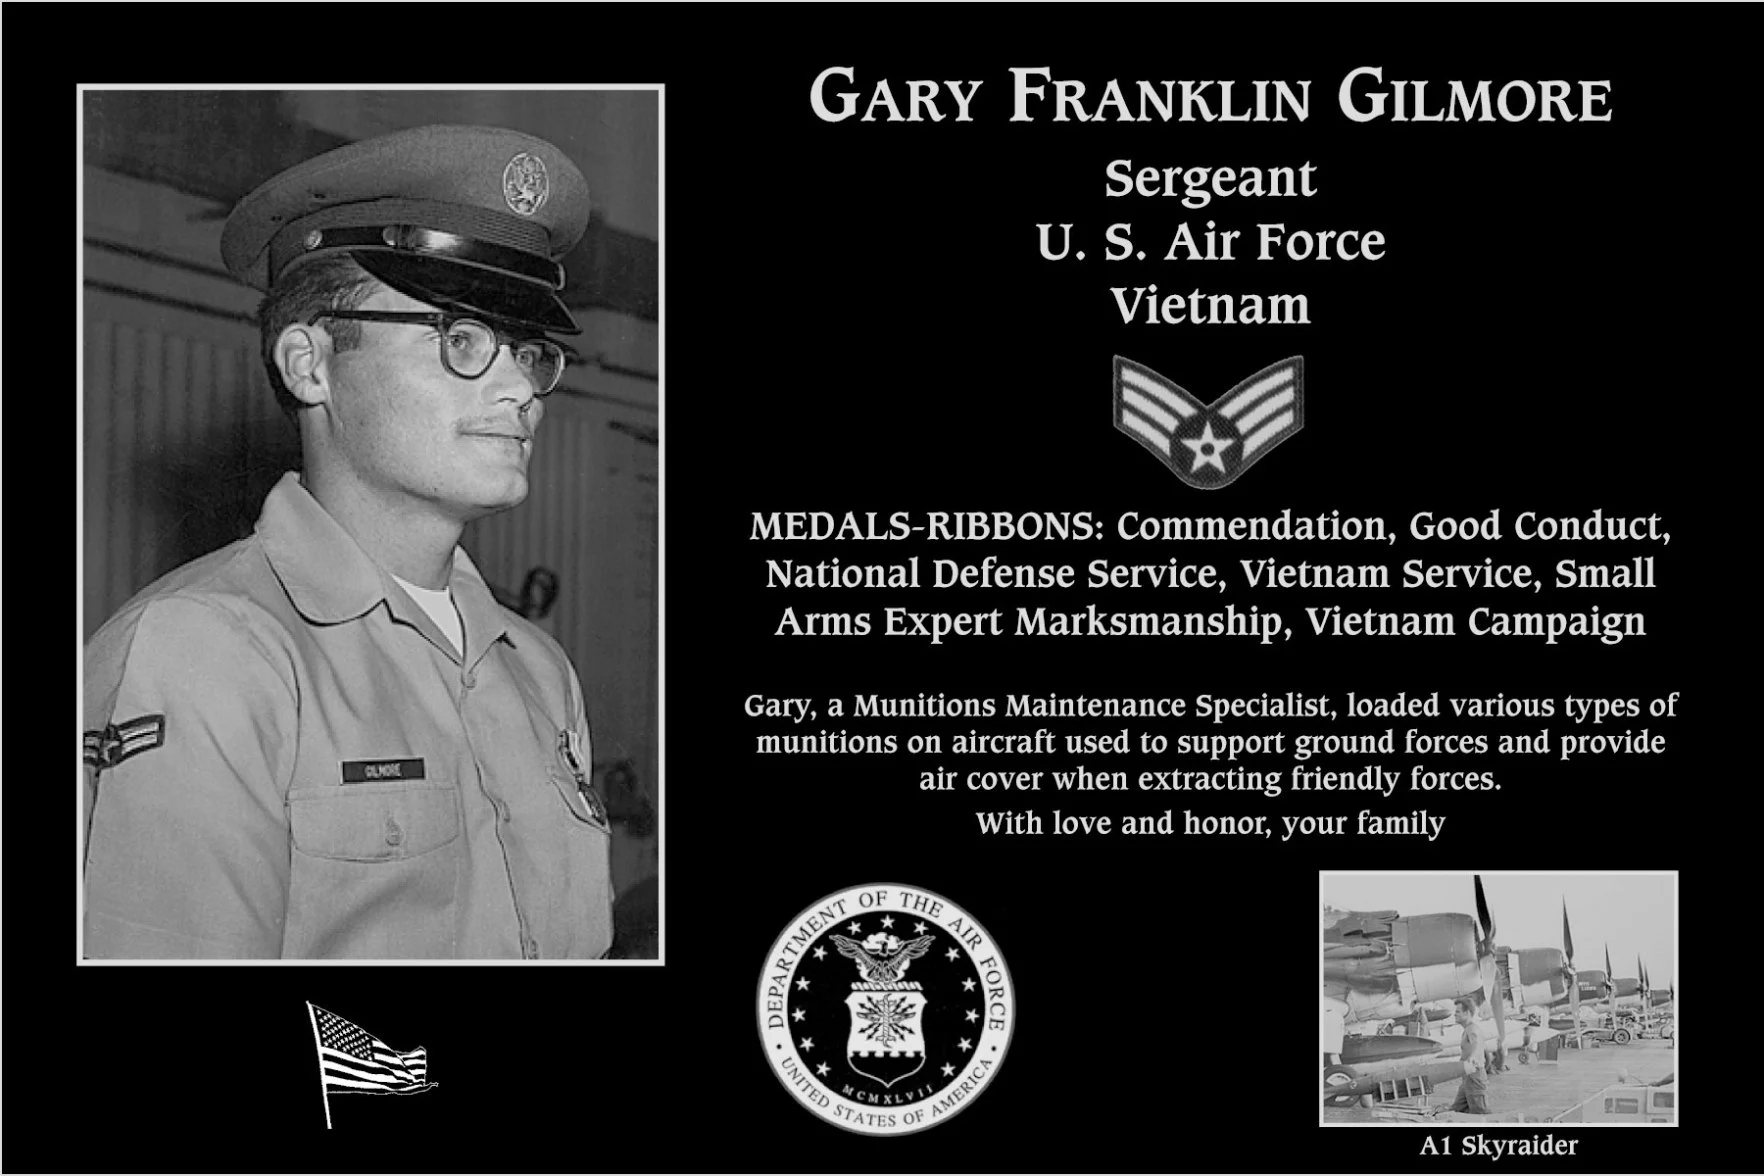 Gary Franklin Gilmore